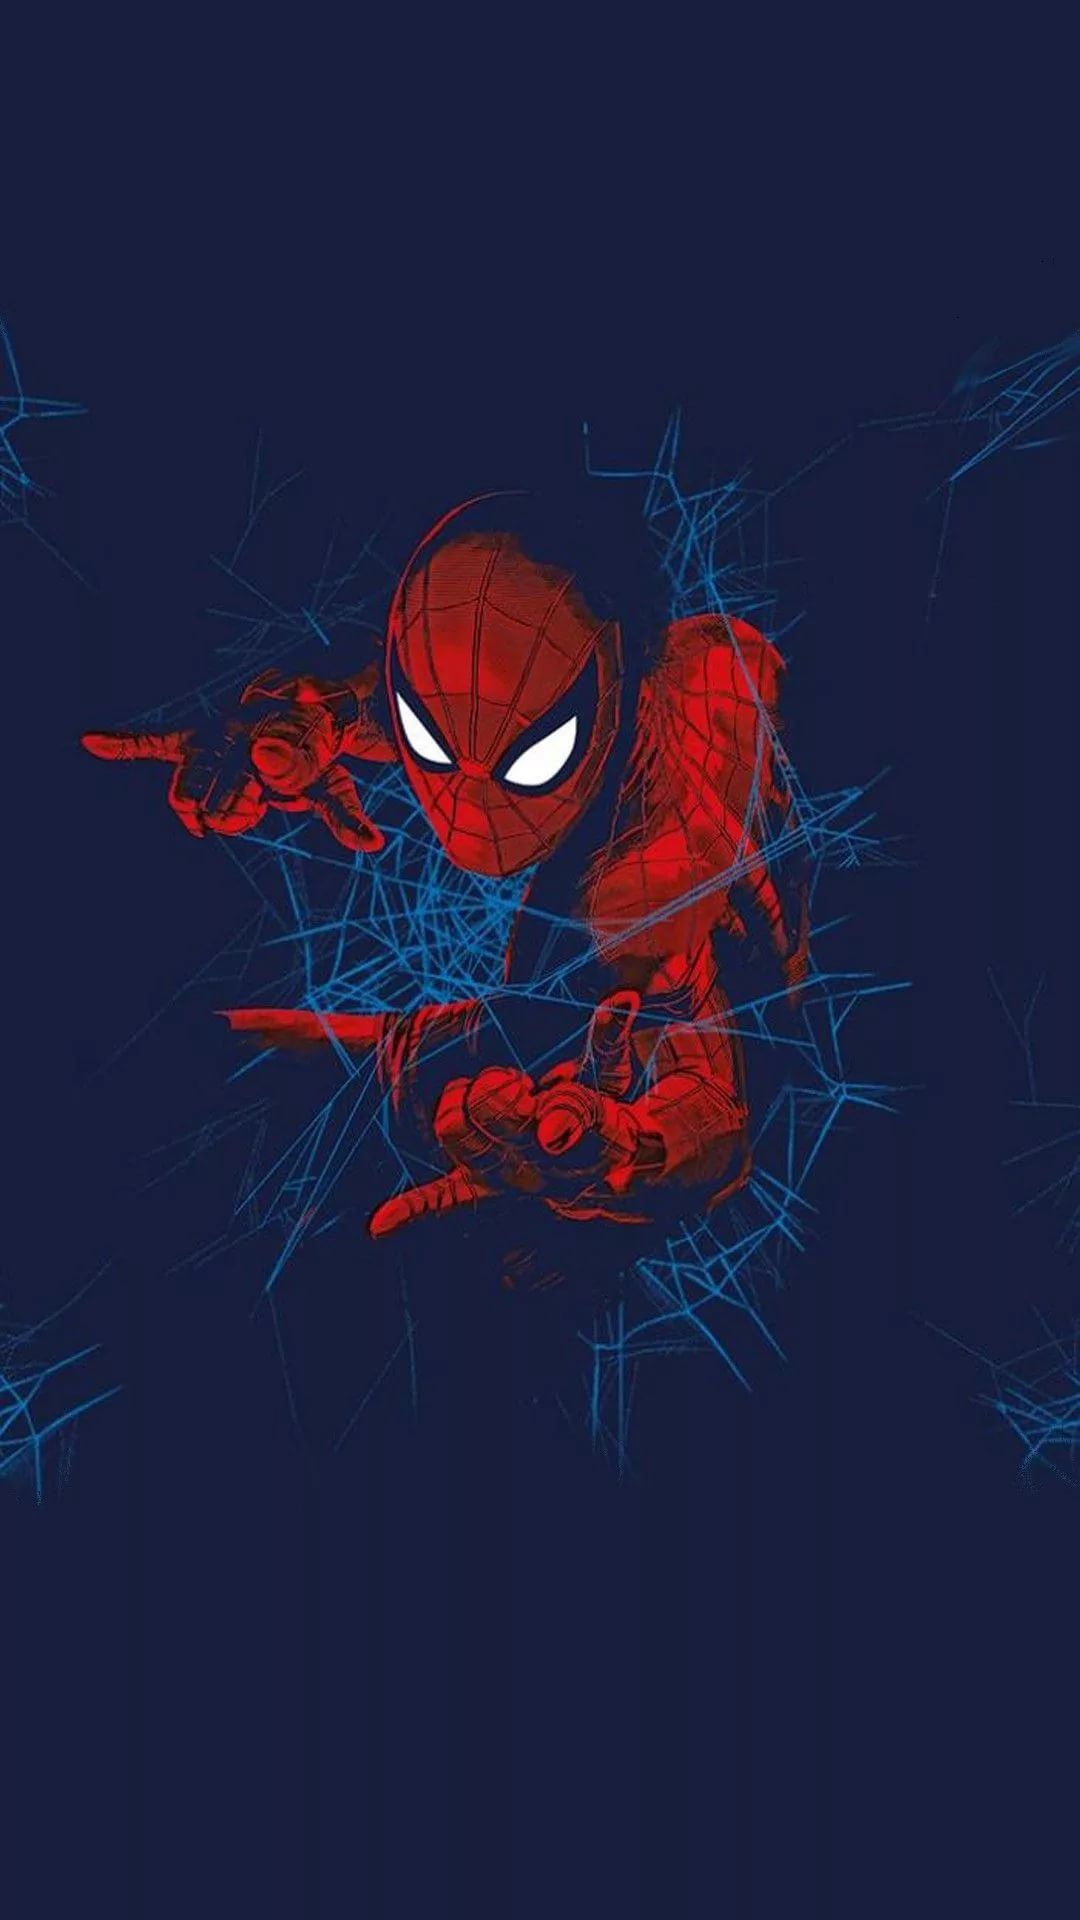 Marvel iPhone hd wallpaper